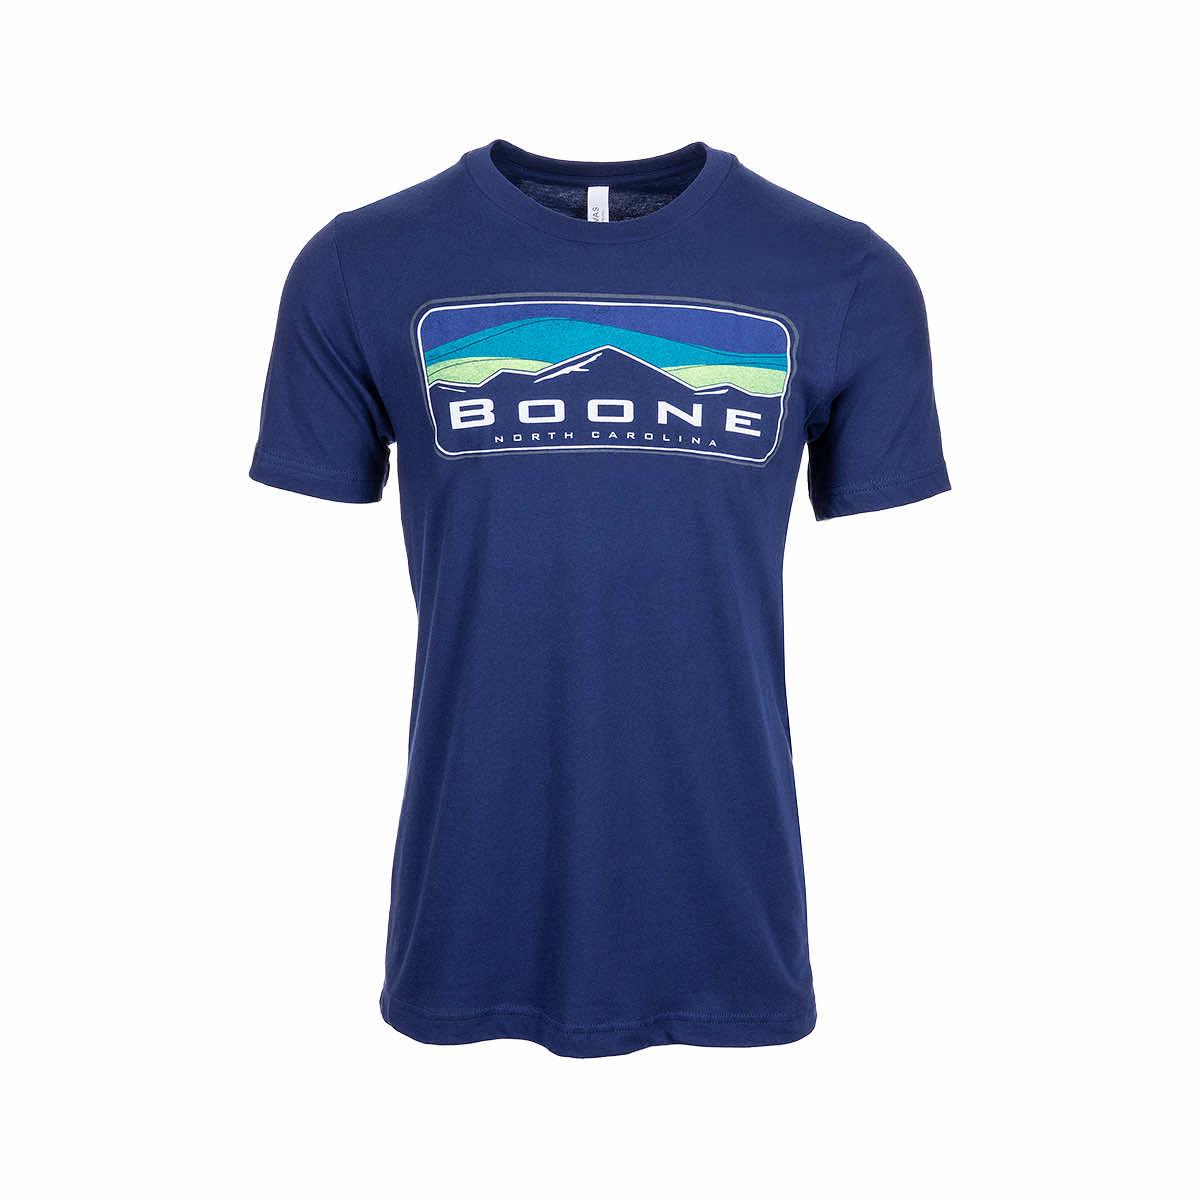  Boone Mountain Candy Short Sleeve T- Shirt